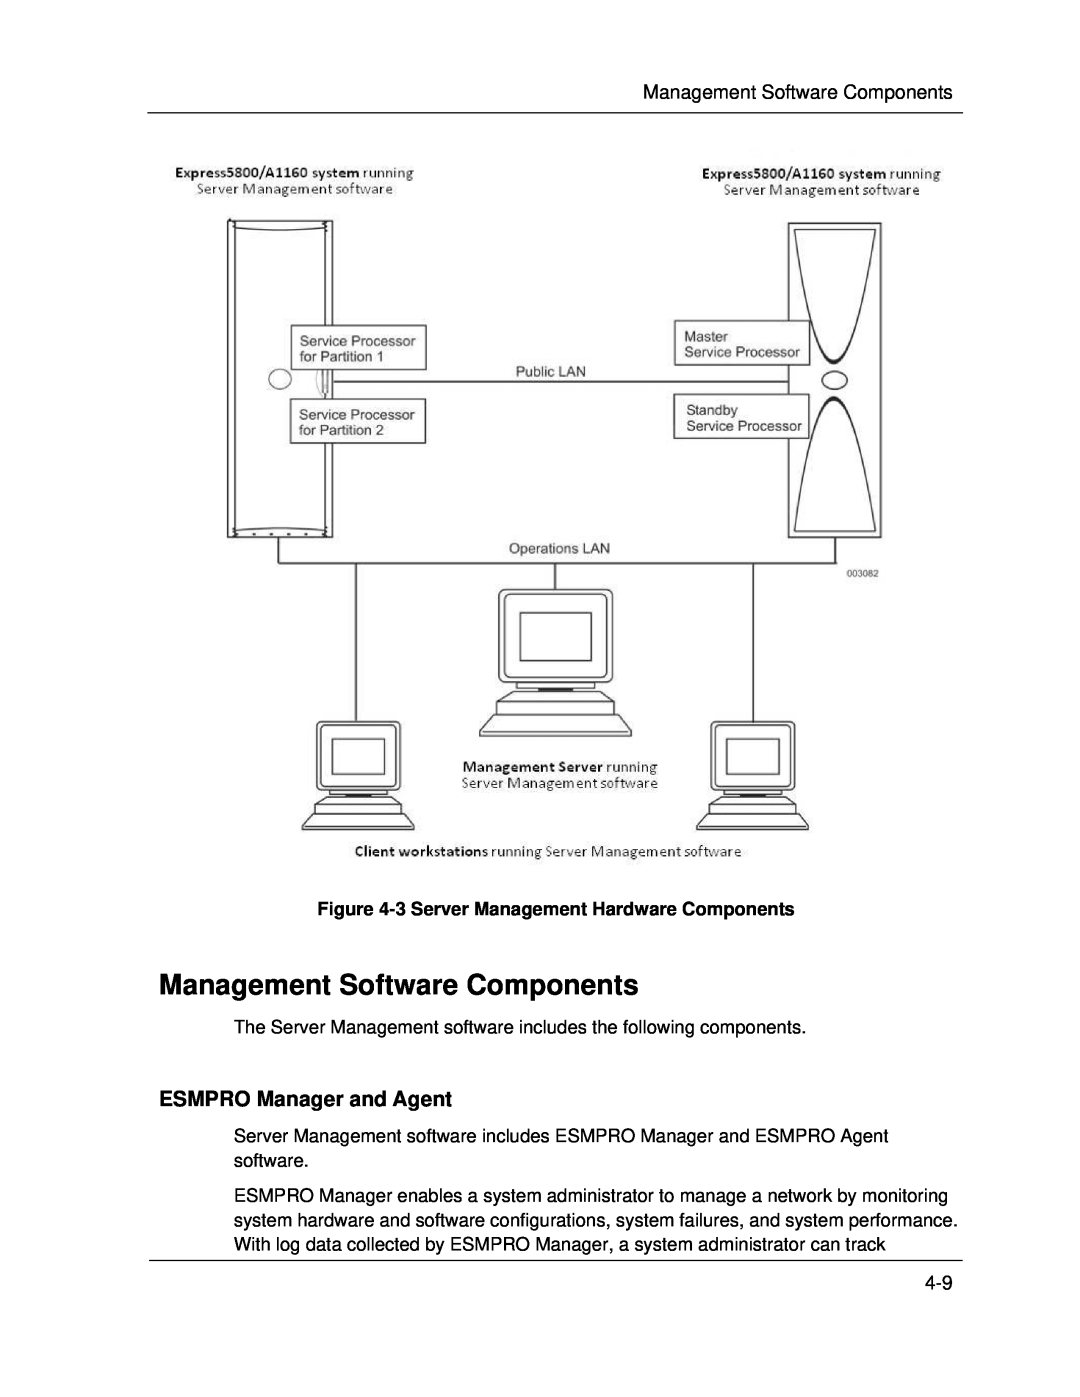 NEC A1160 manual Management Software Components, ESMPRO Manager and Agent, 3Server Management Hardware Components 